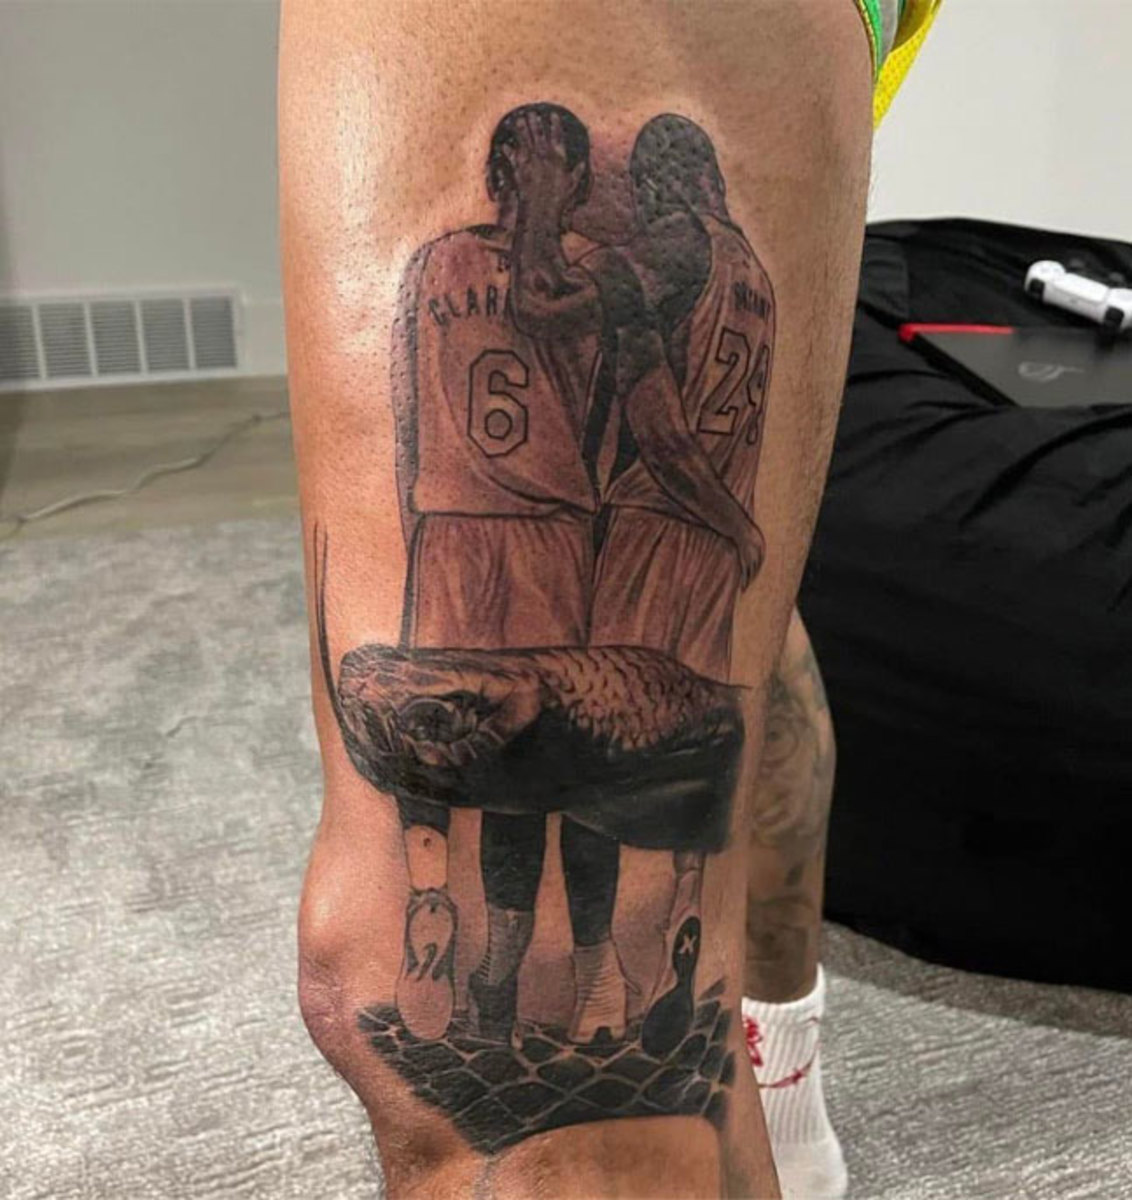 Look Devin Booker Be Legendary tattoo honors Kobe Bryant